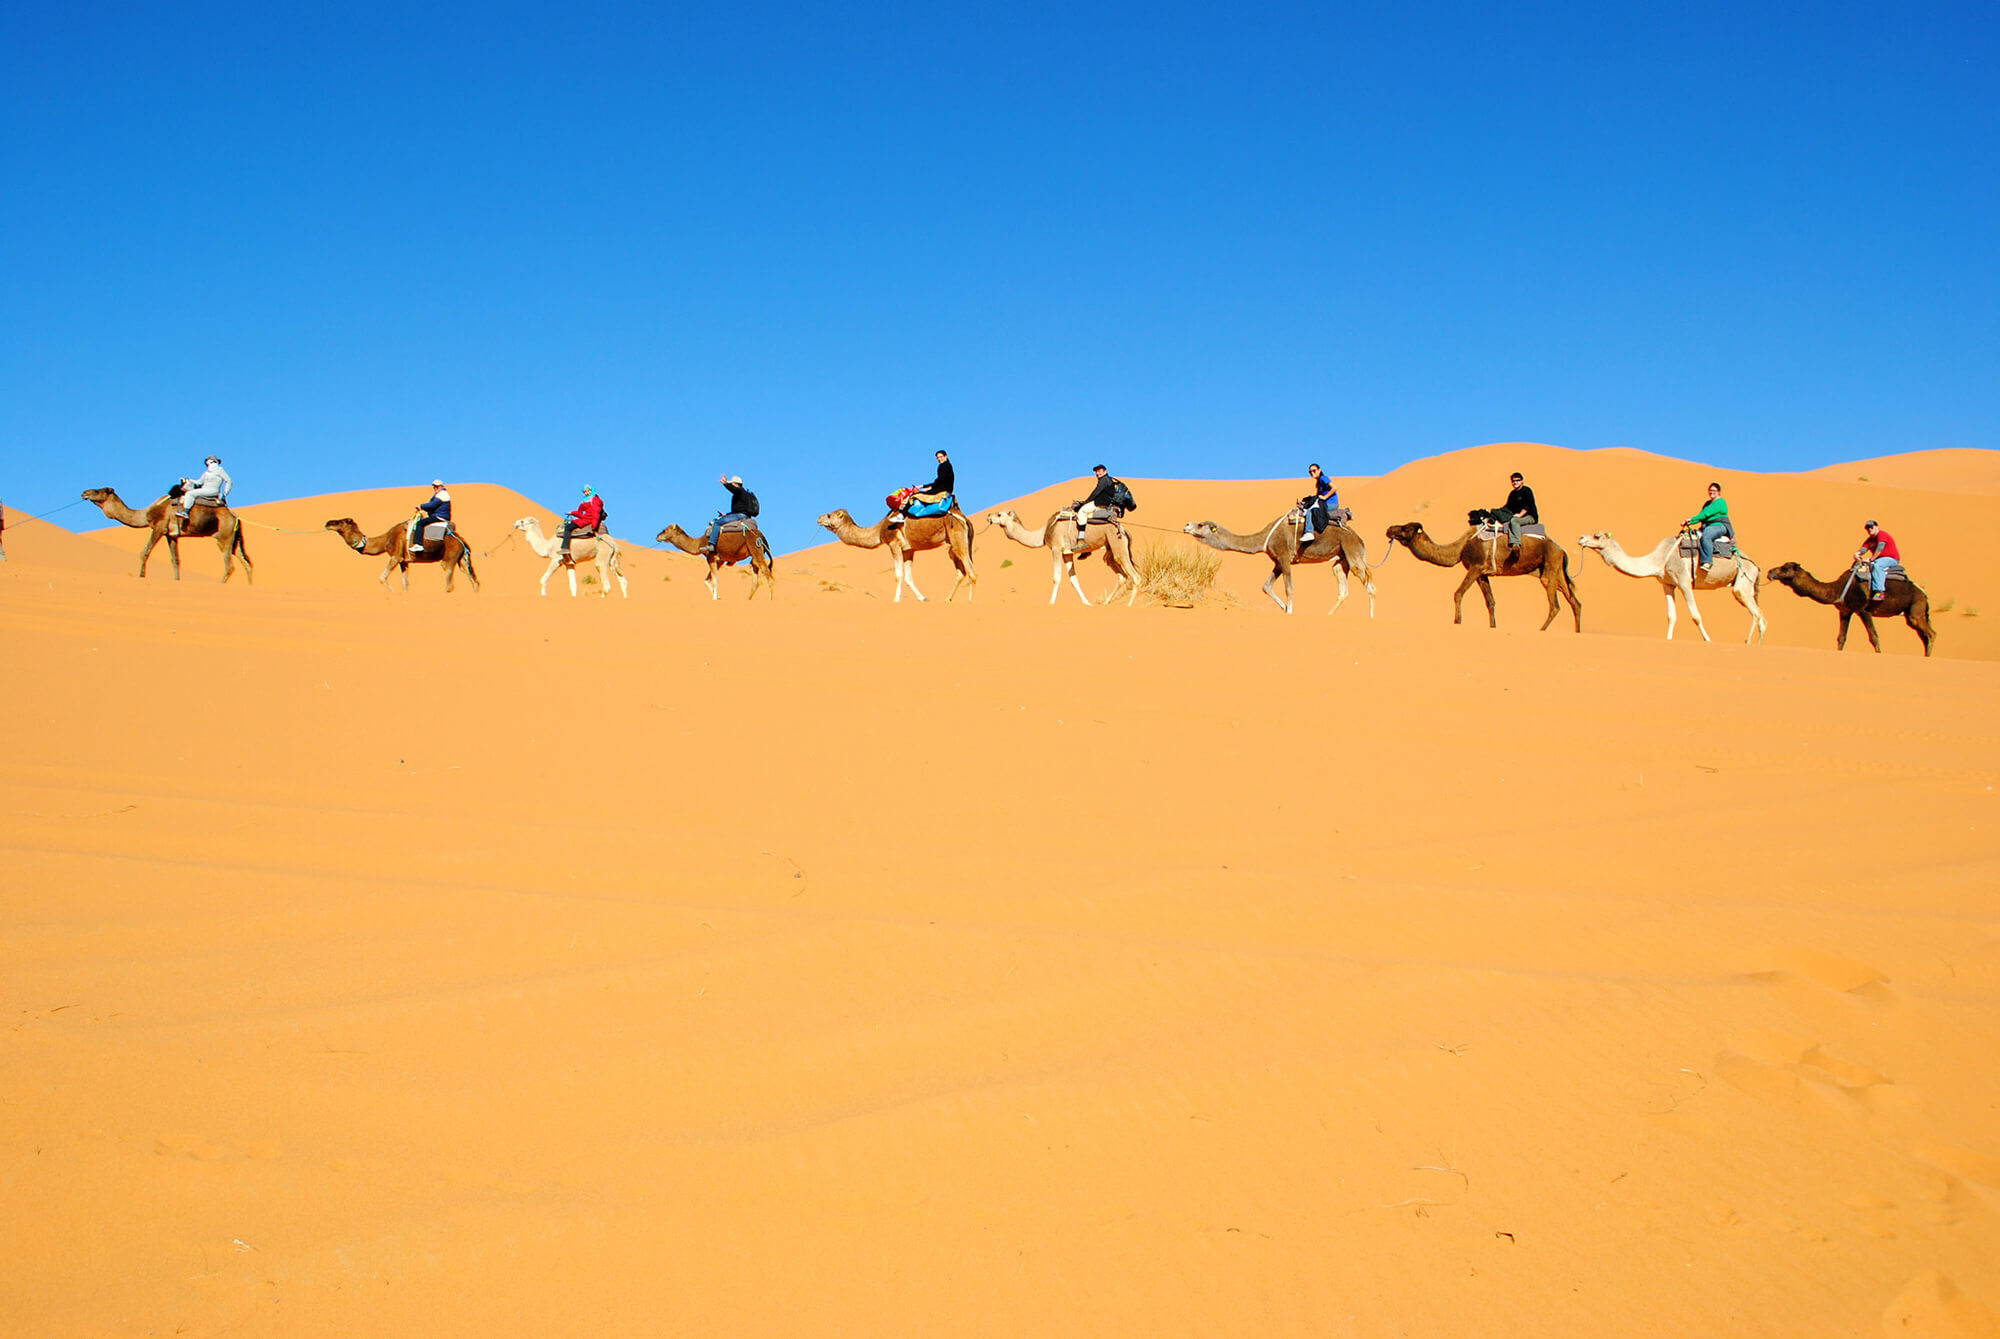 Five Amazing Adventure Activities in Morocco - Camel Trekking through the Sahara Desert